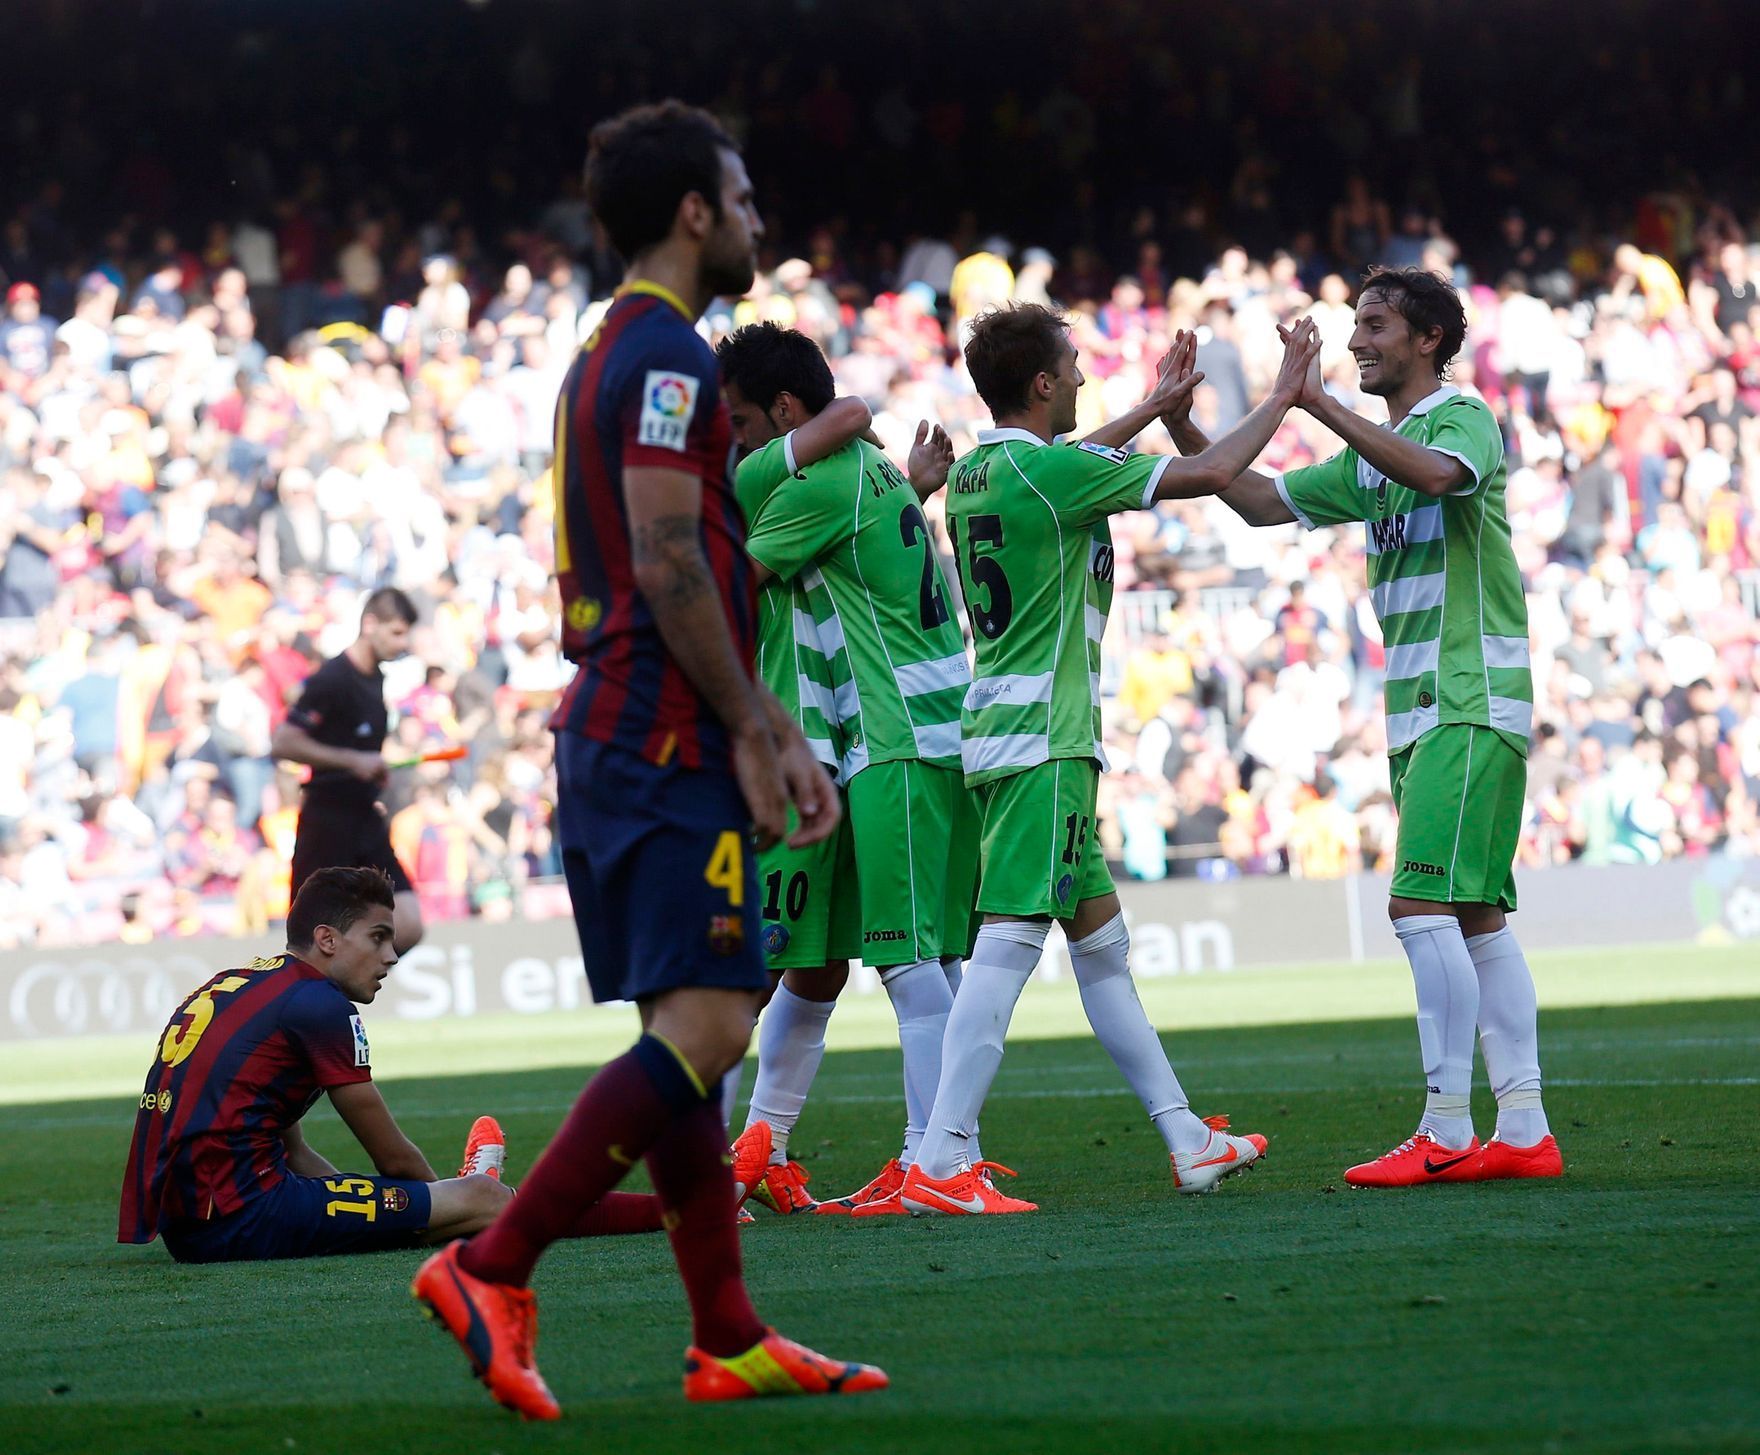 Getafe's players celebrate a goal against Barcelona's Cesc Fabregas during their La Liga soccer match at Camp Nou stadium in Barcelona